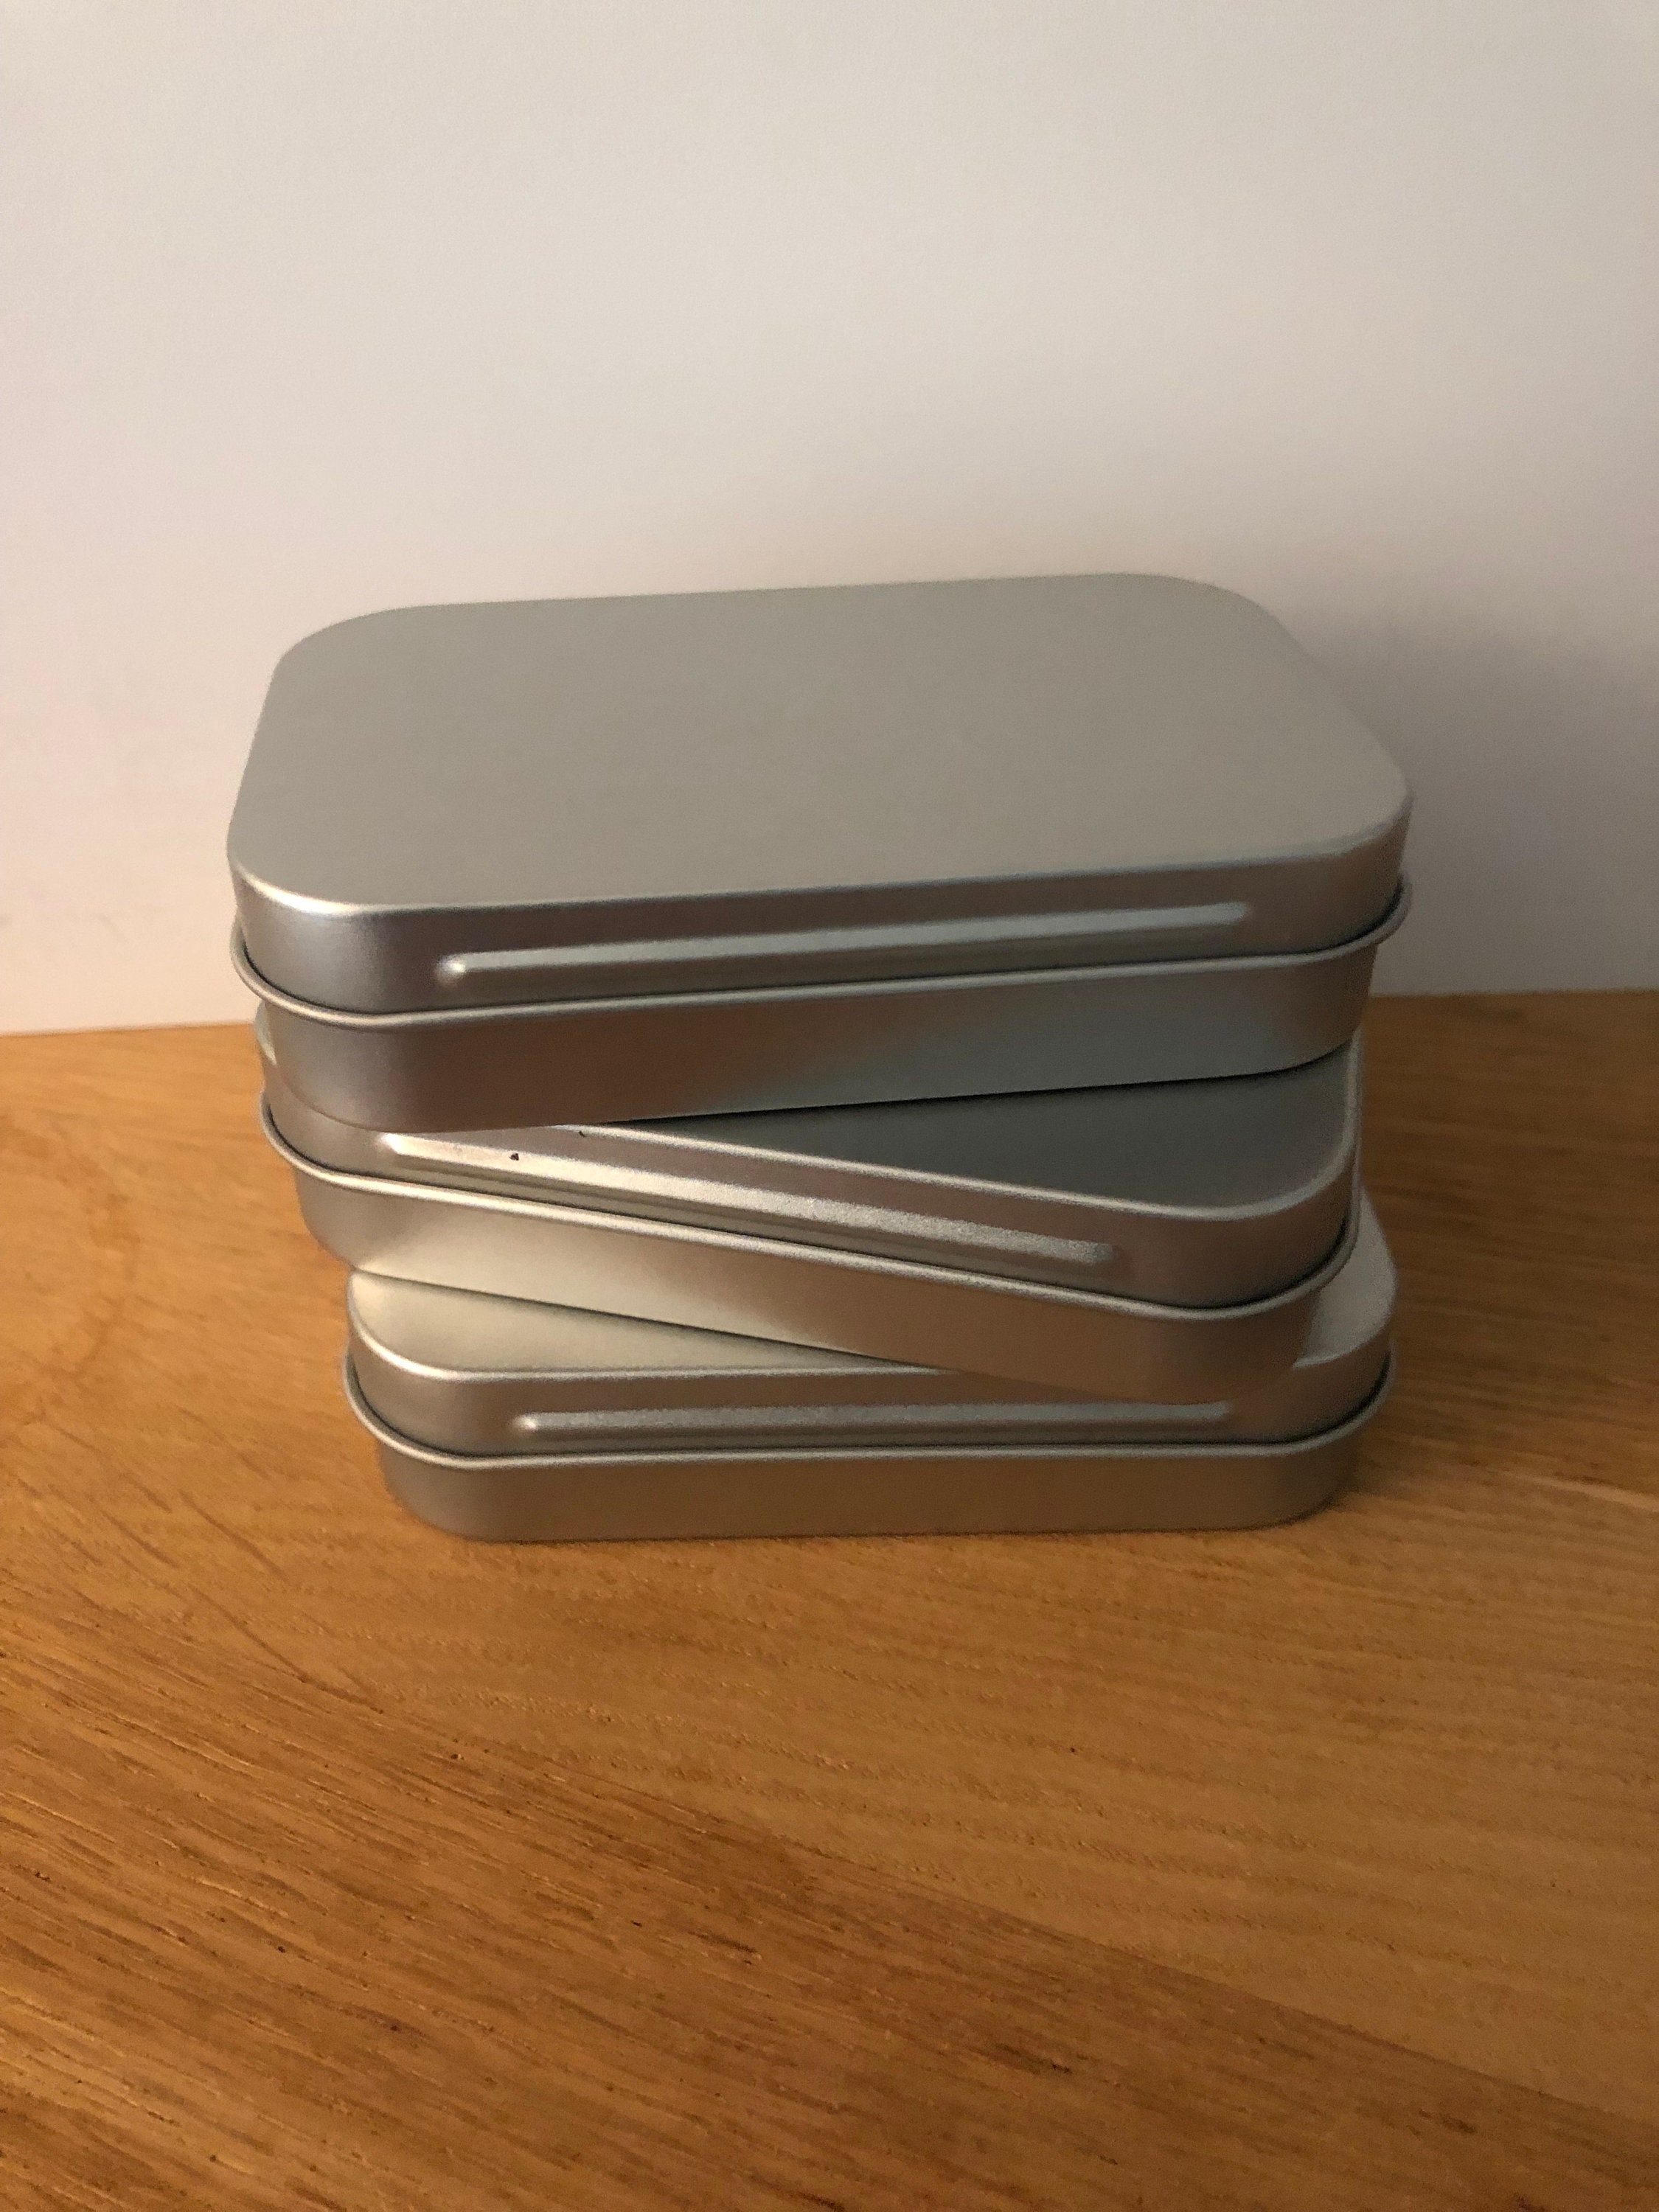 Metal Tin Box, 8pcs 3.15 x 1.5 x 0.79 with Hinged Lids, Silver